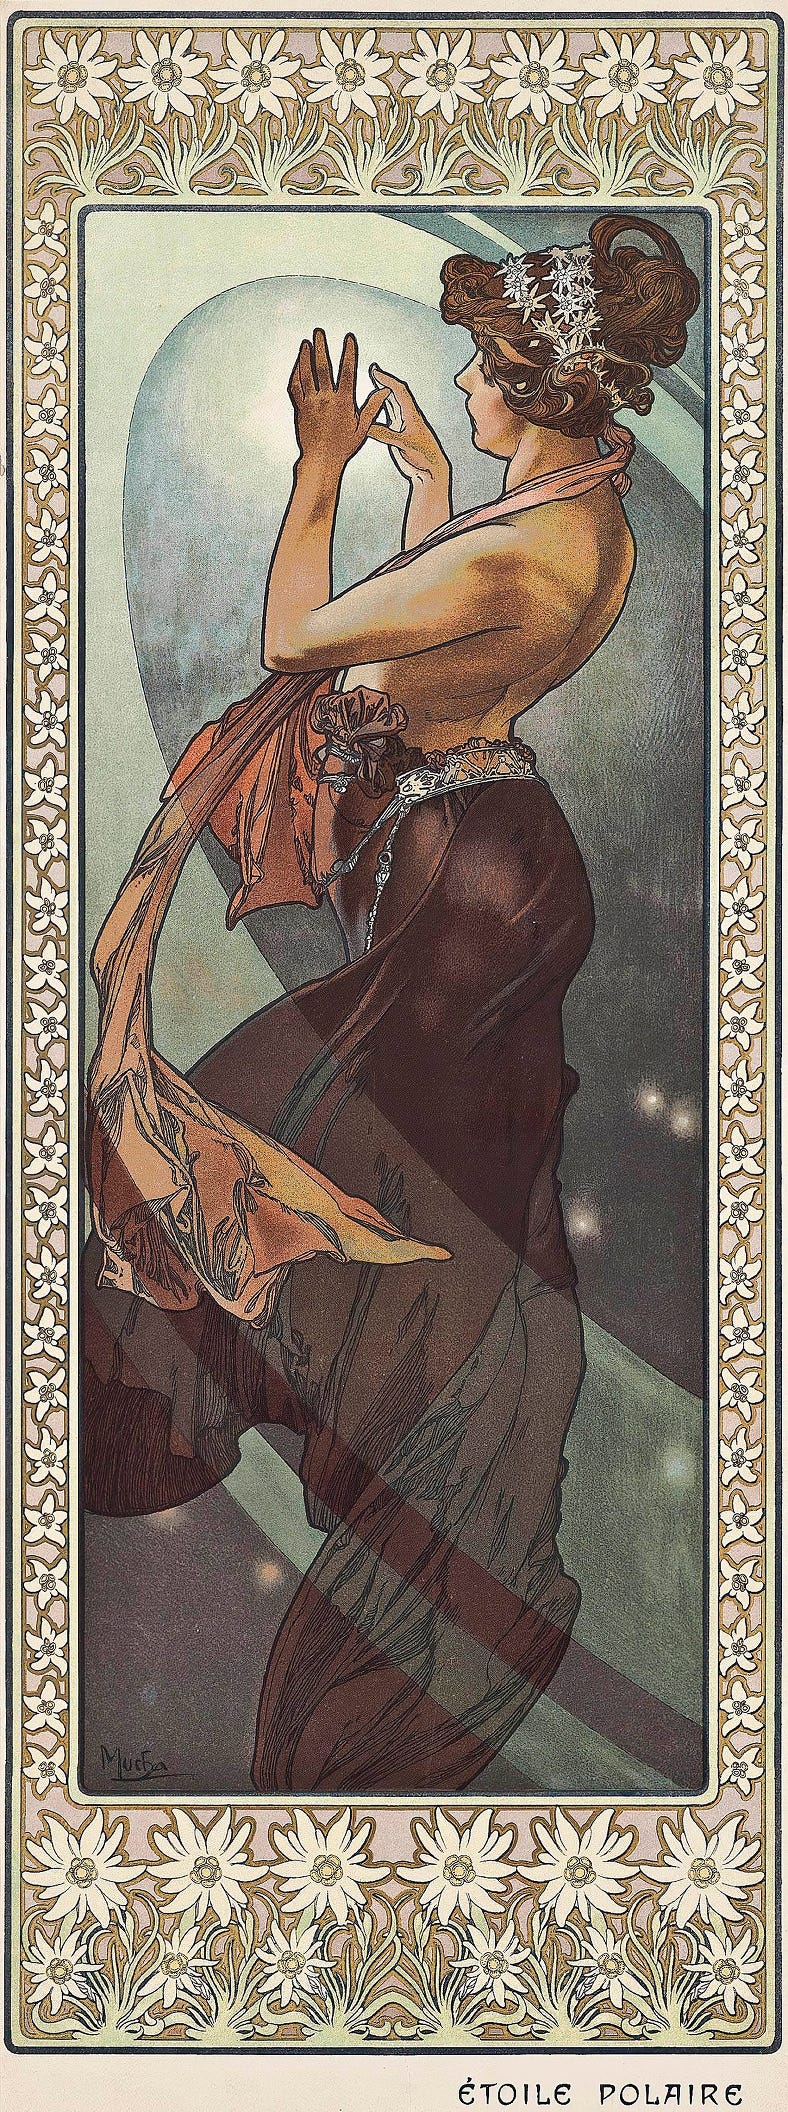 Étoile Polaire (1902) by Alphonse Mucha